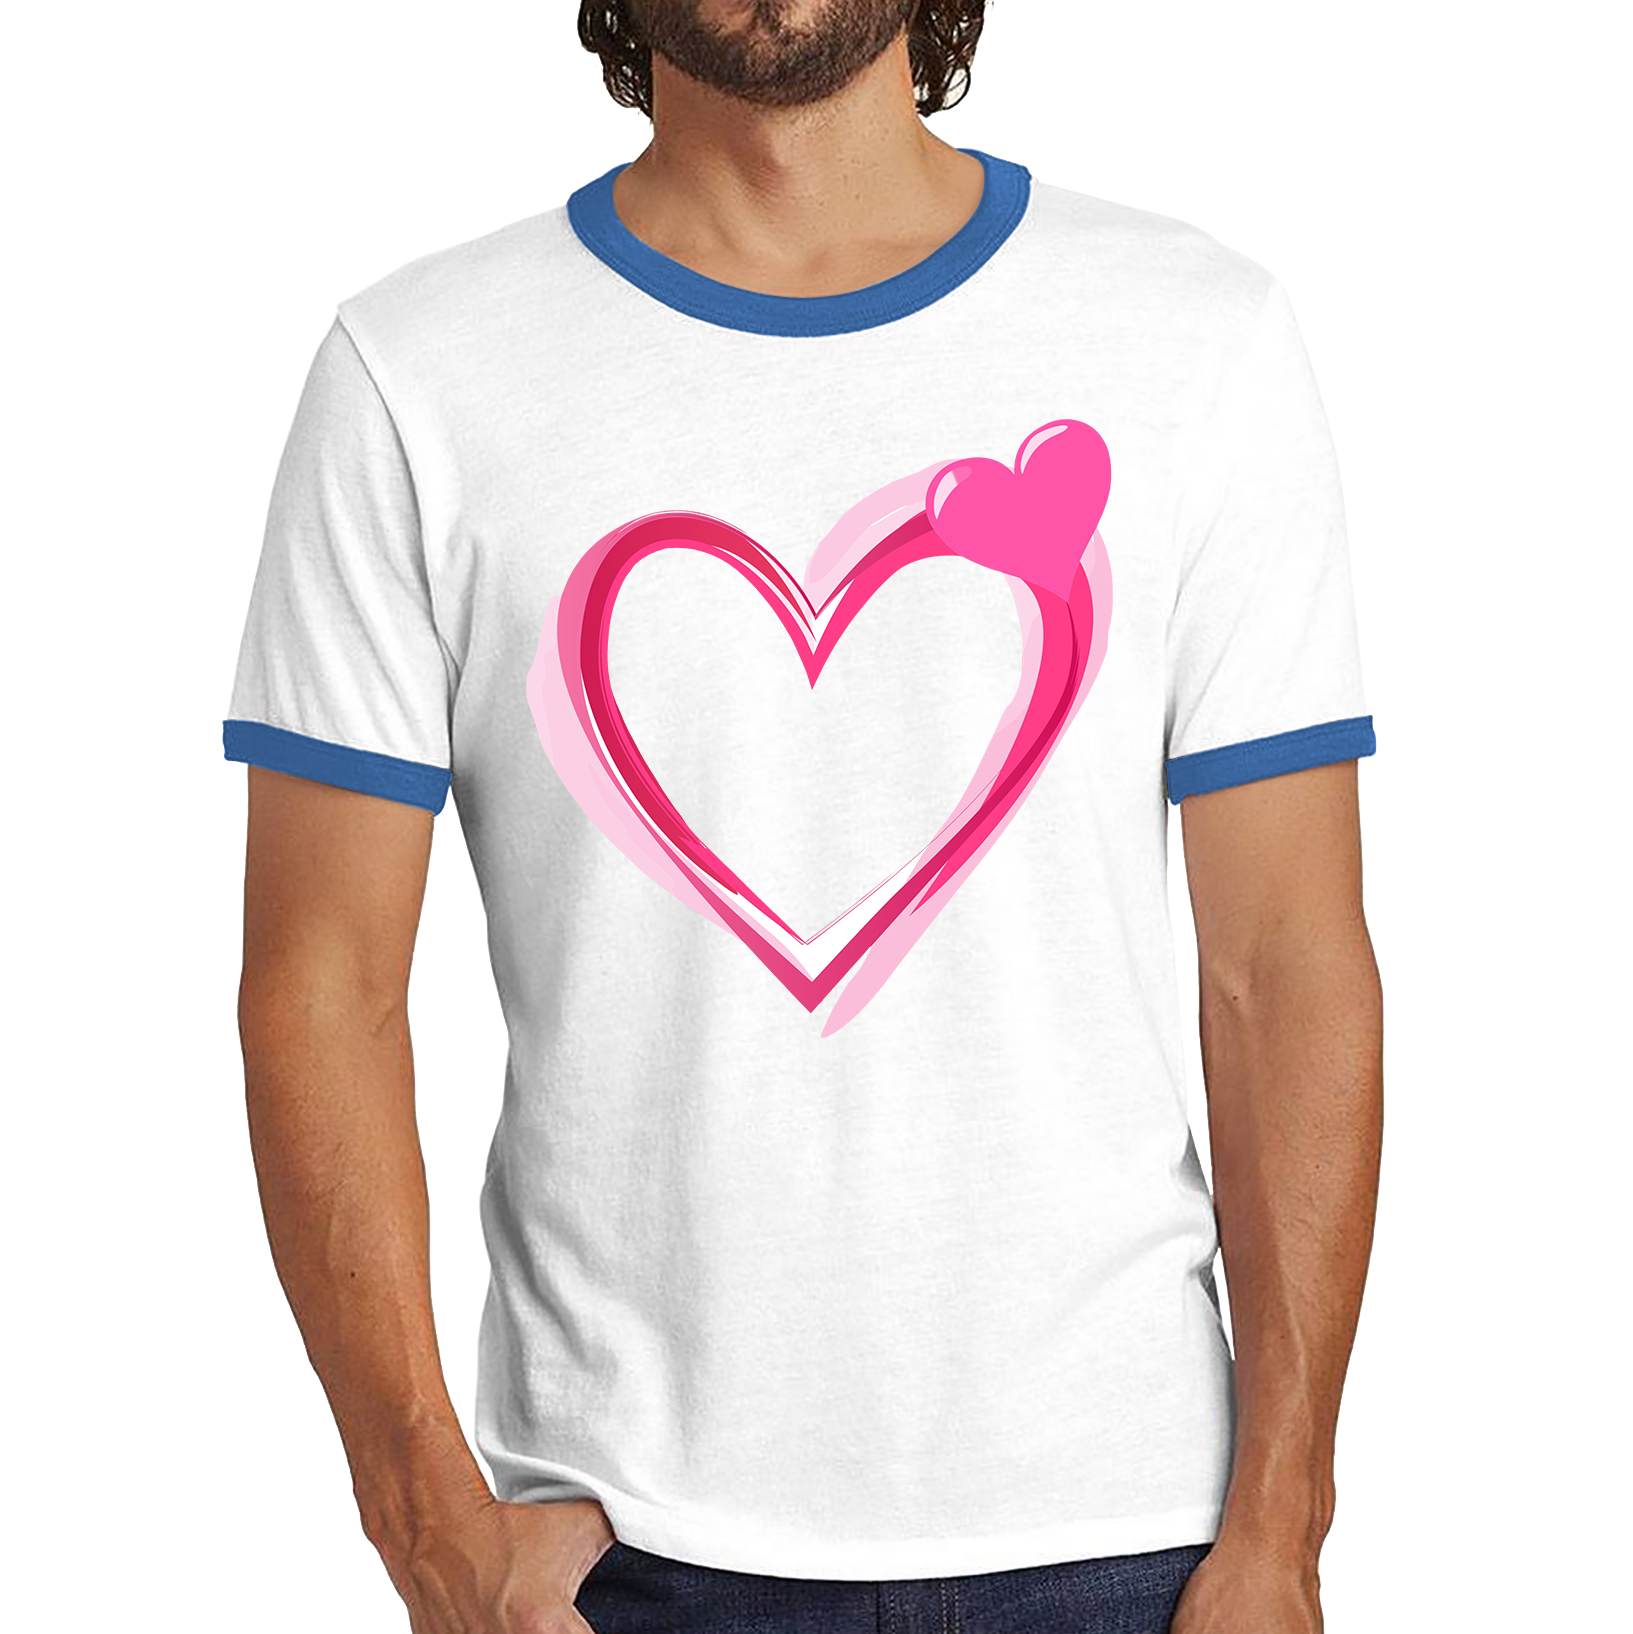 Love Valentines Day Ringer Tee Top, Valentines Heart Ringer T Shirt, Cute Valentine‘s Day Ringer T Shirt